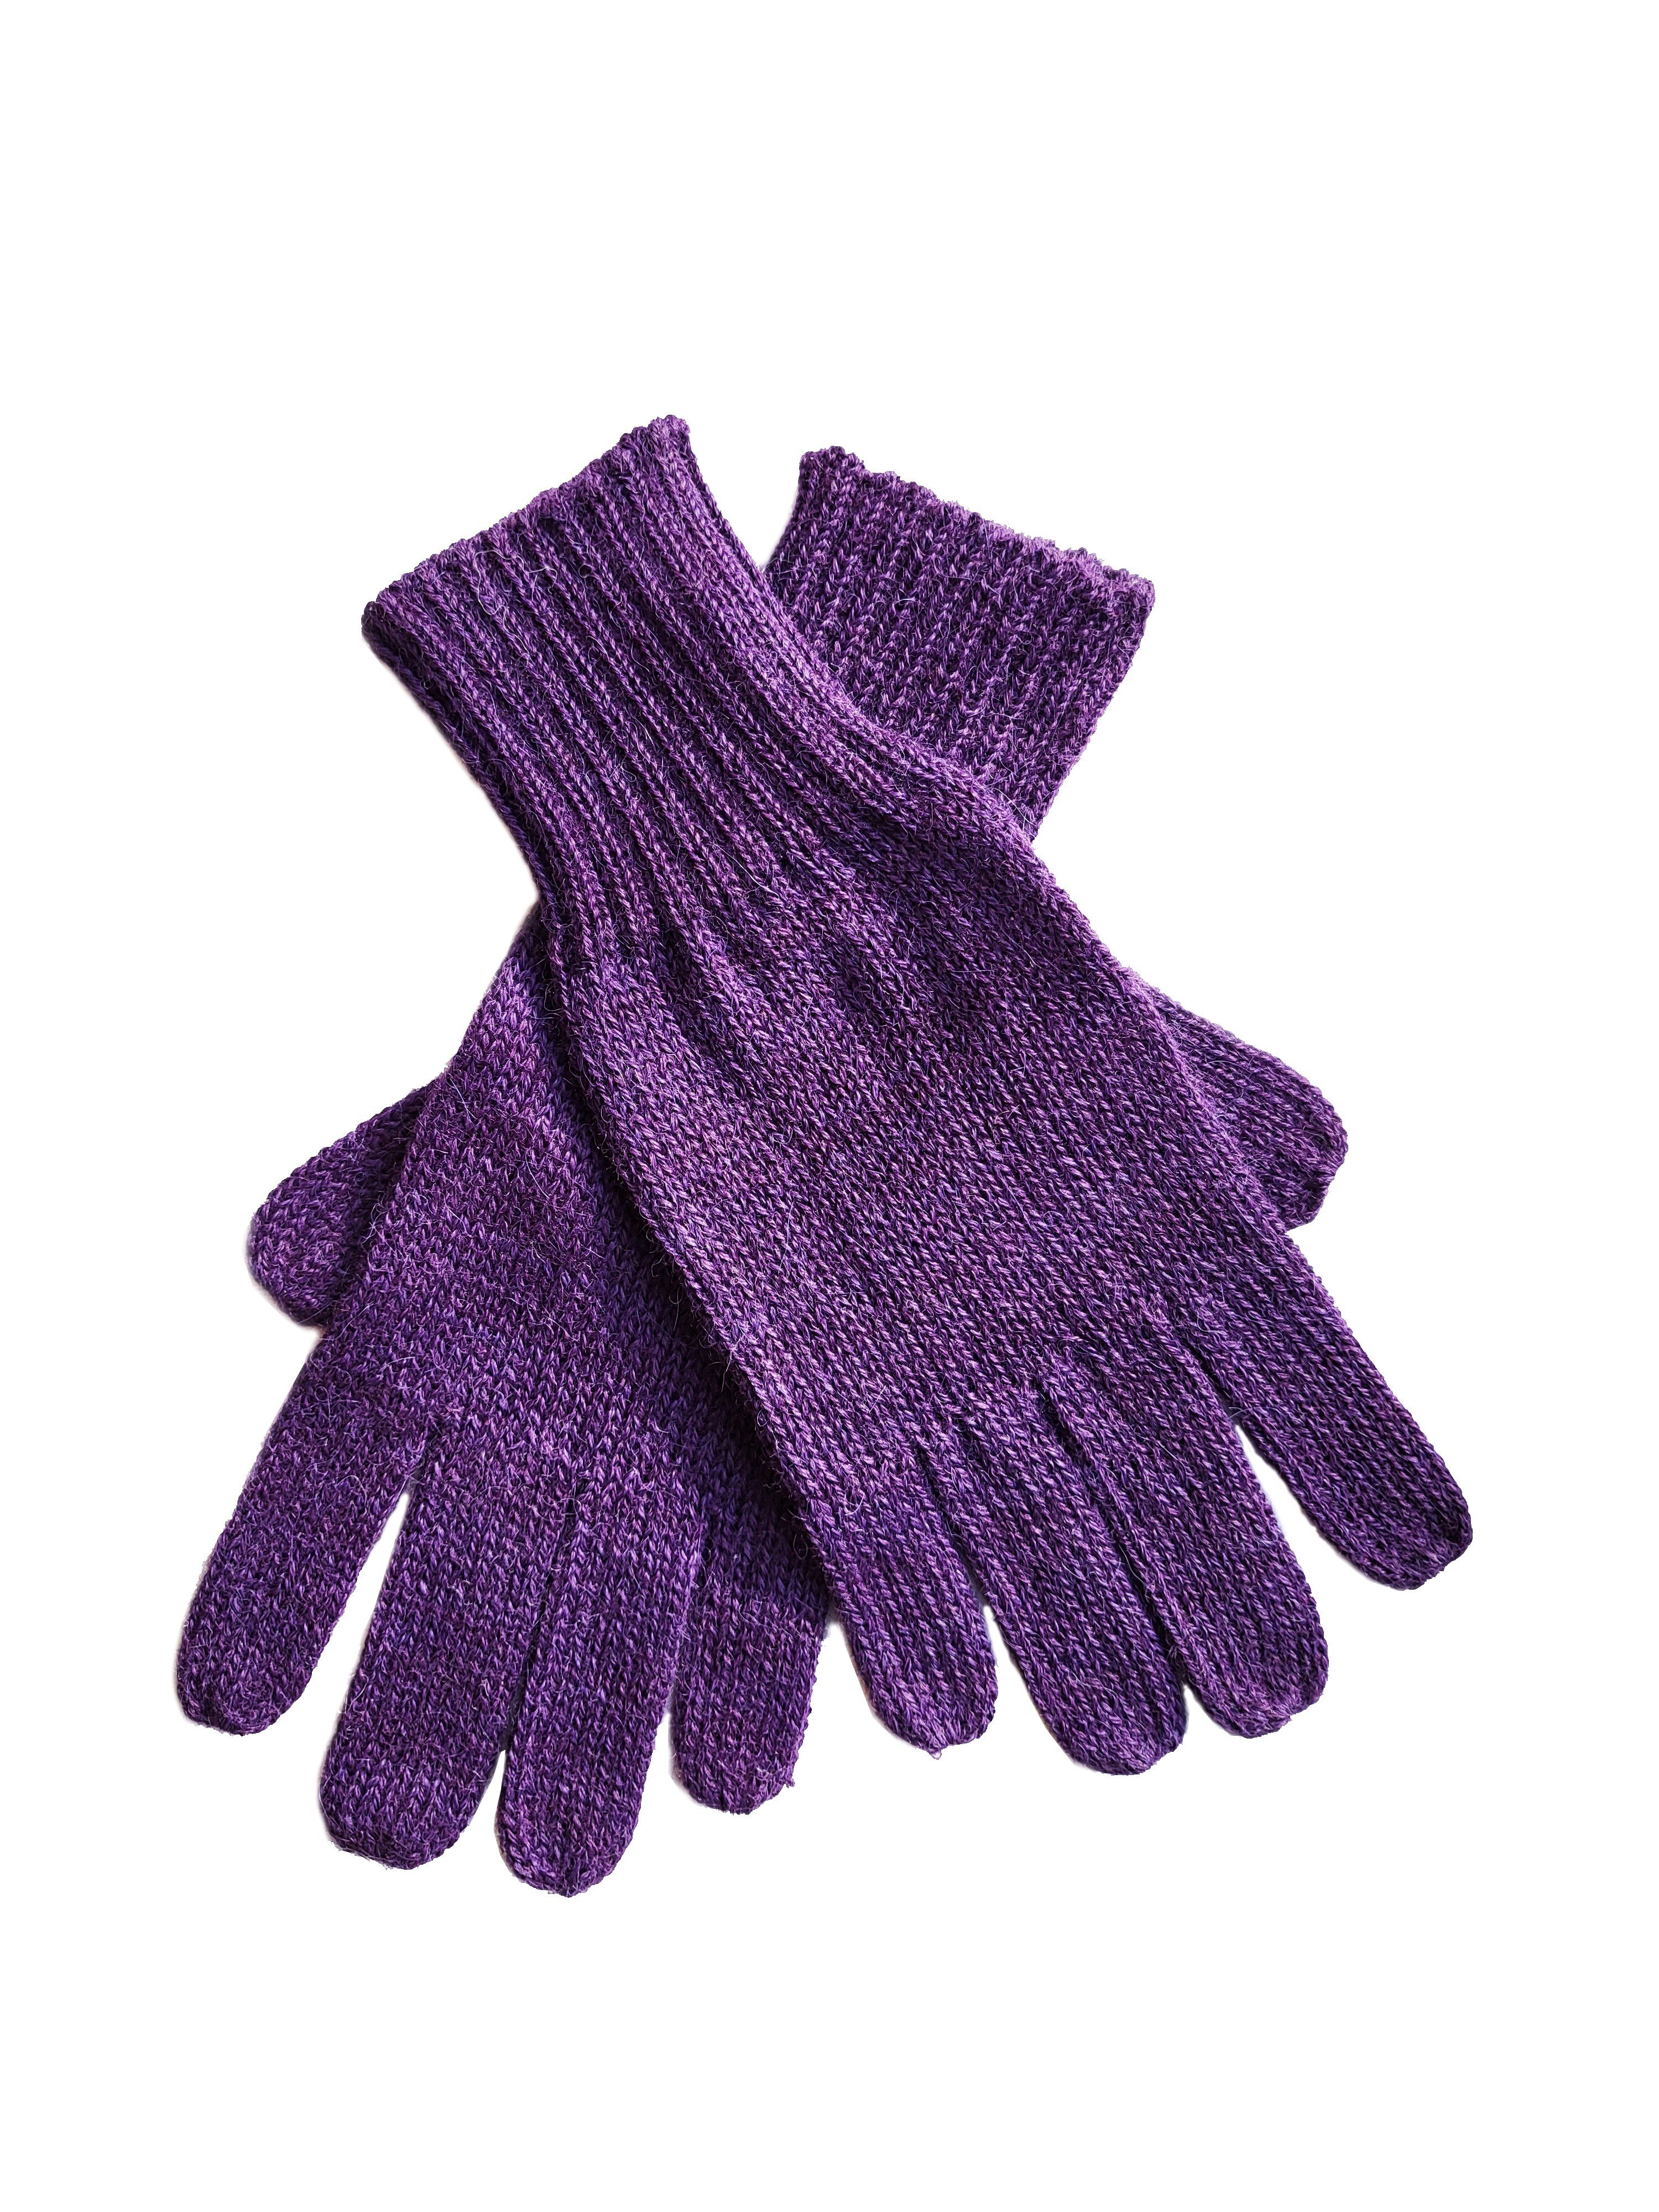 Posh Gear Strickhandschuhe Guantino Alpaka Fingerhandschuhe aus 100% Alpakawolle lila | Wollhandschuhe